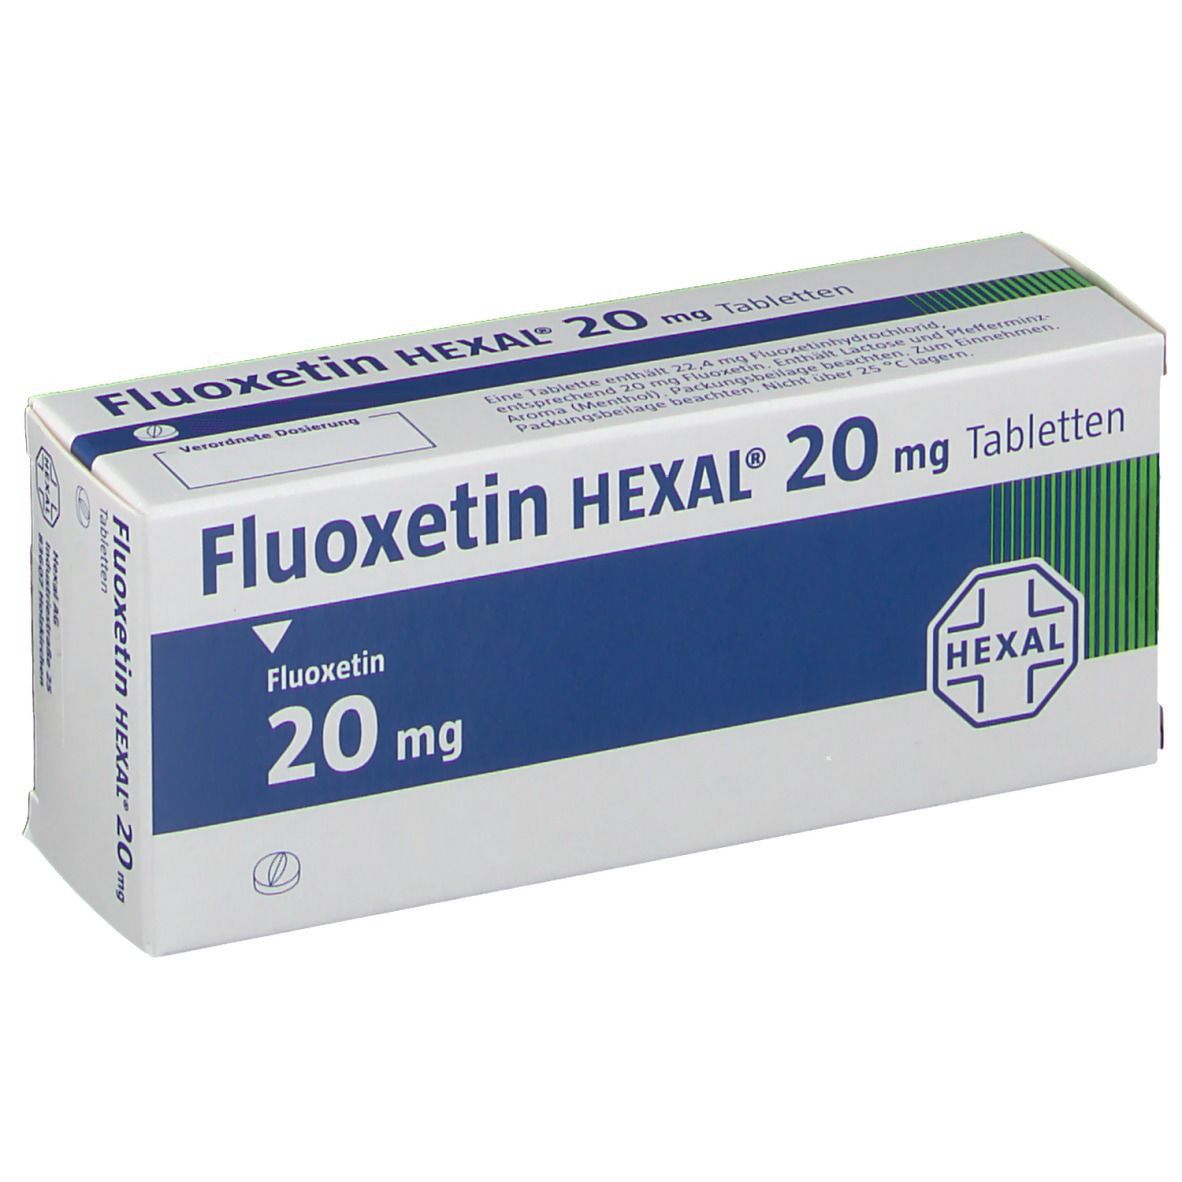 Fluoxetin HEXAL® 20 mg